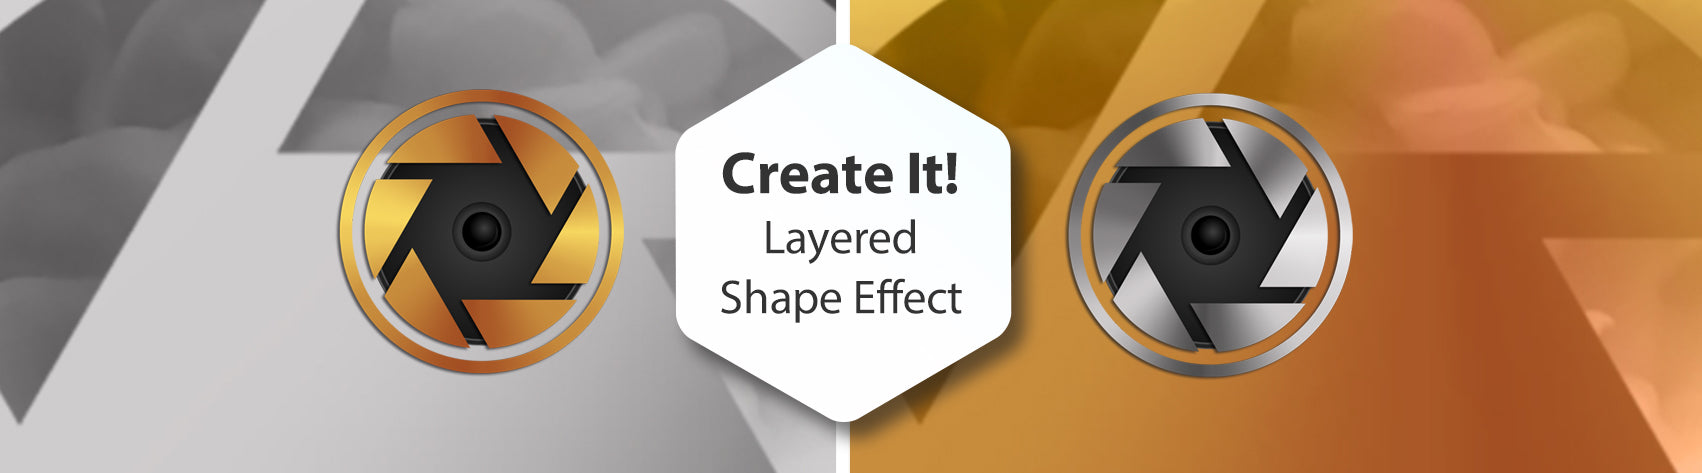 Create It! Layered Shape Effect